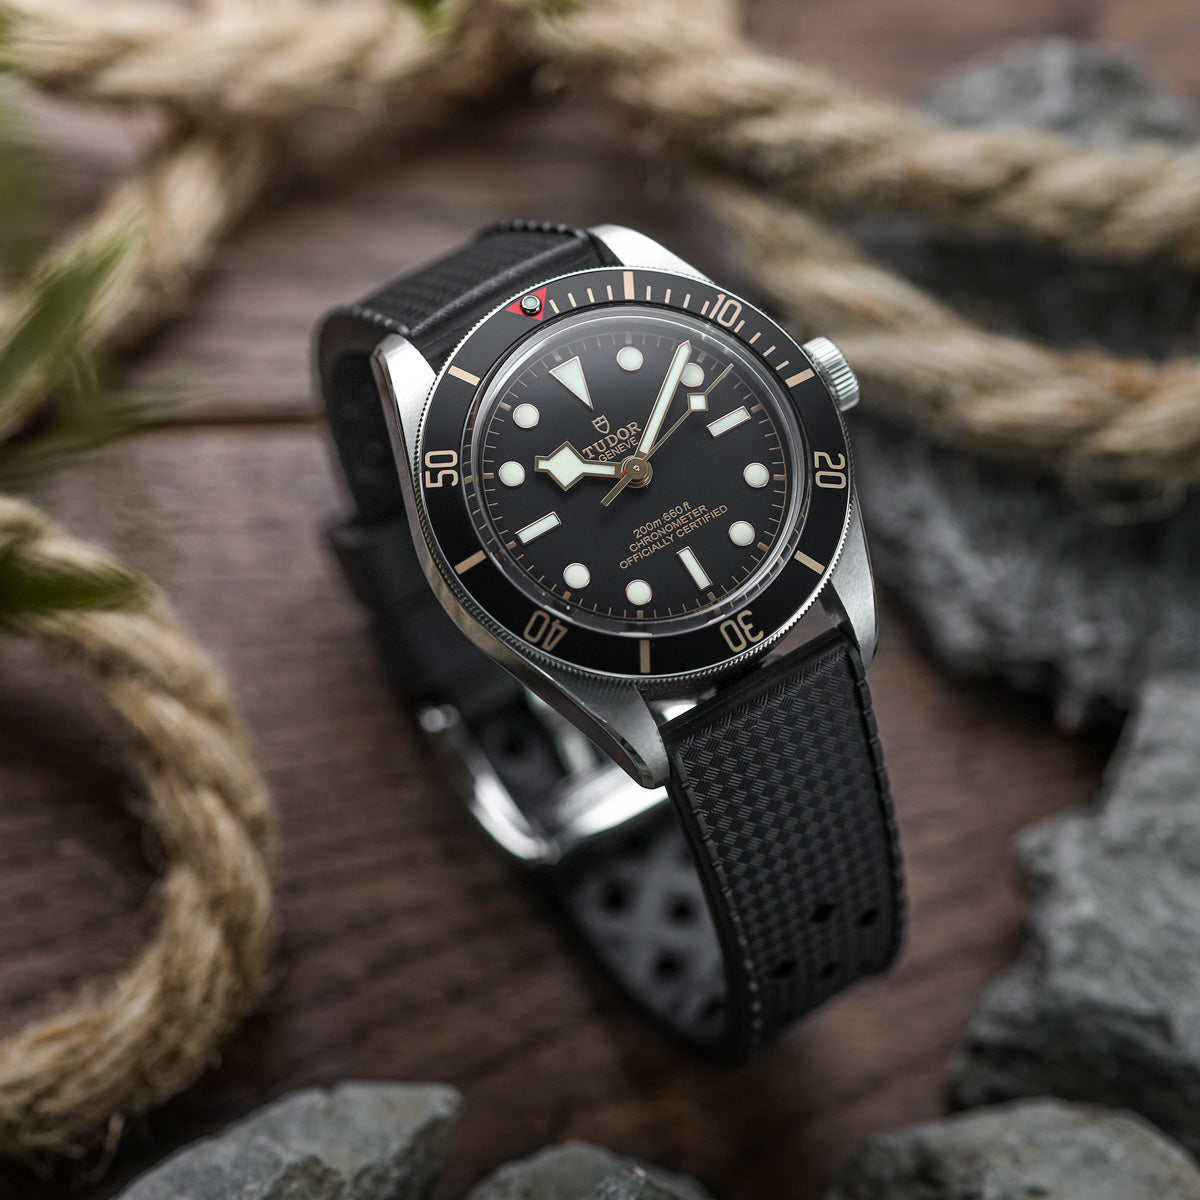 ZULUDIVER Modern Tropical Watch Strap (MkII) - Black - Silver Hardware - additional image 1